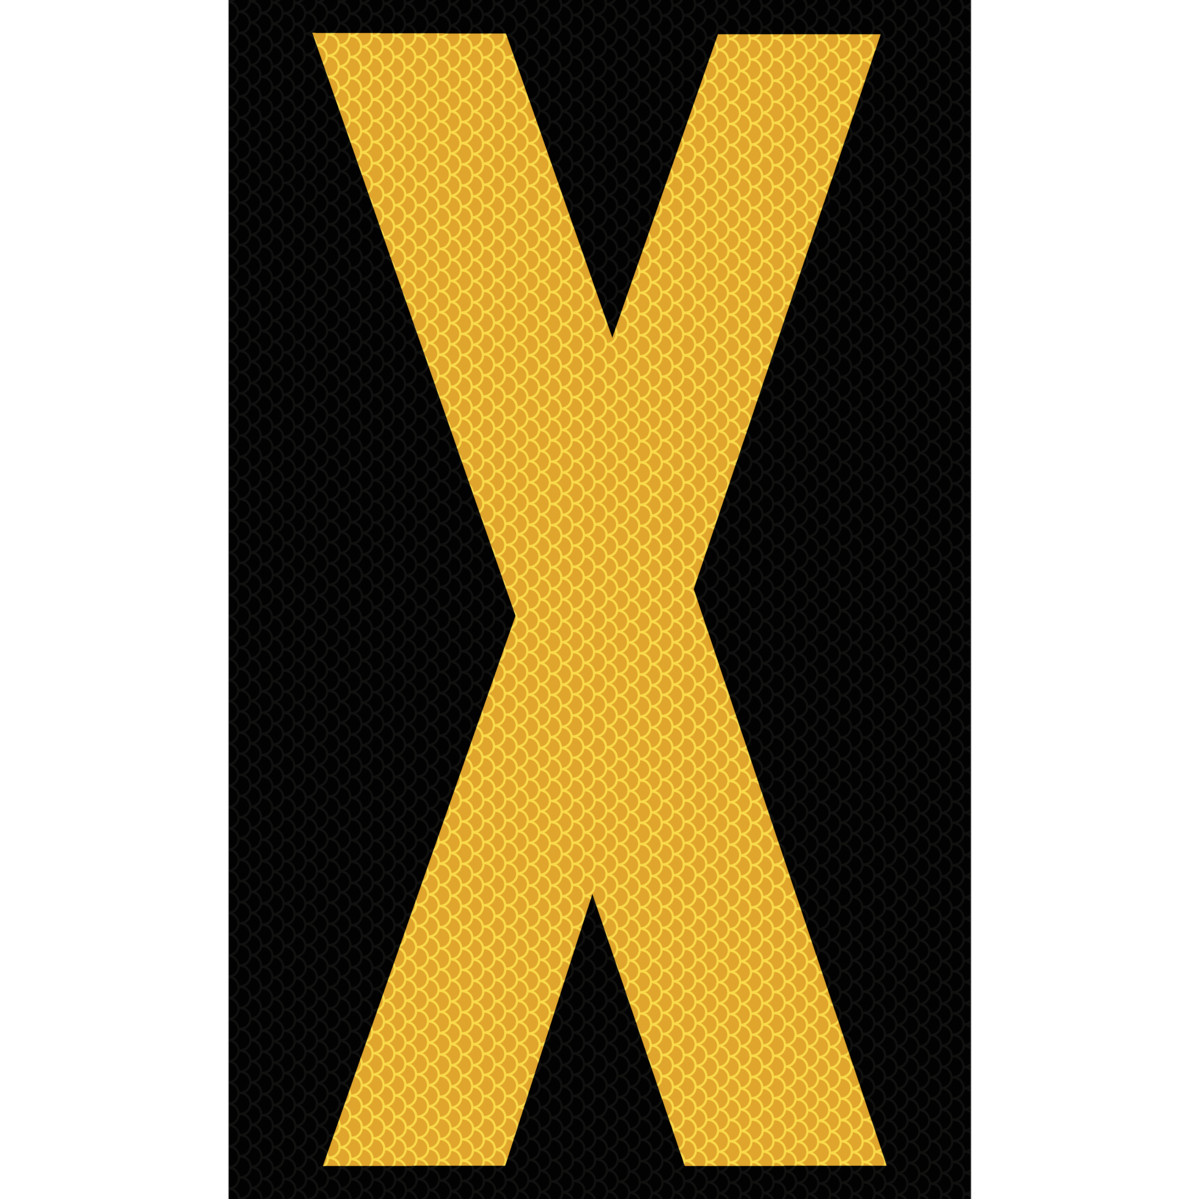 3" Yellow on Black High Intensity Reflective "X"